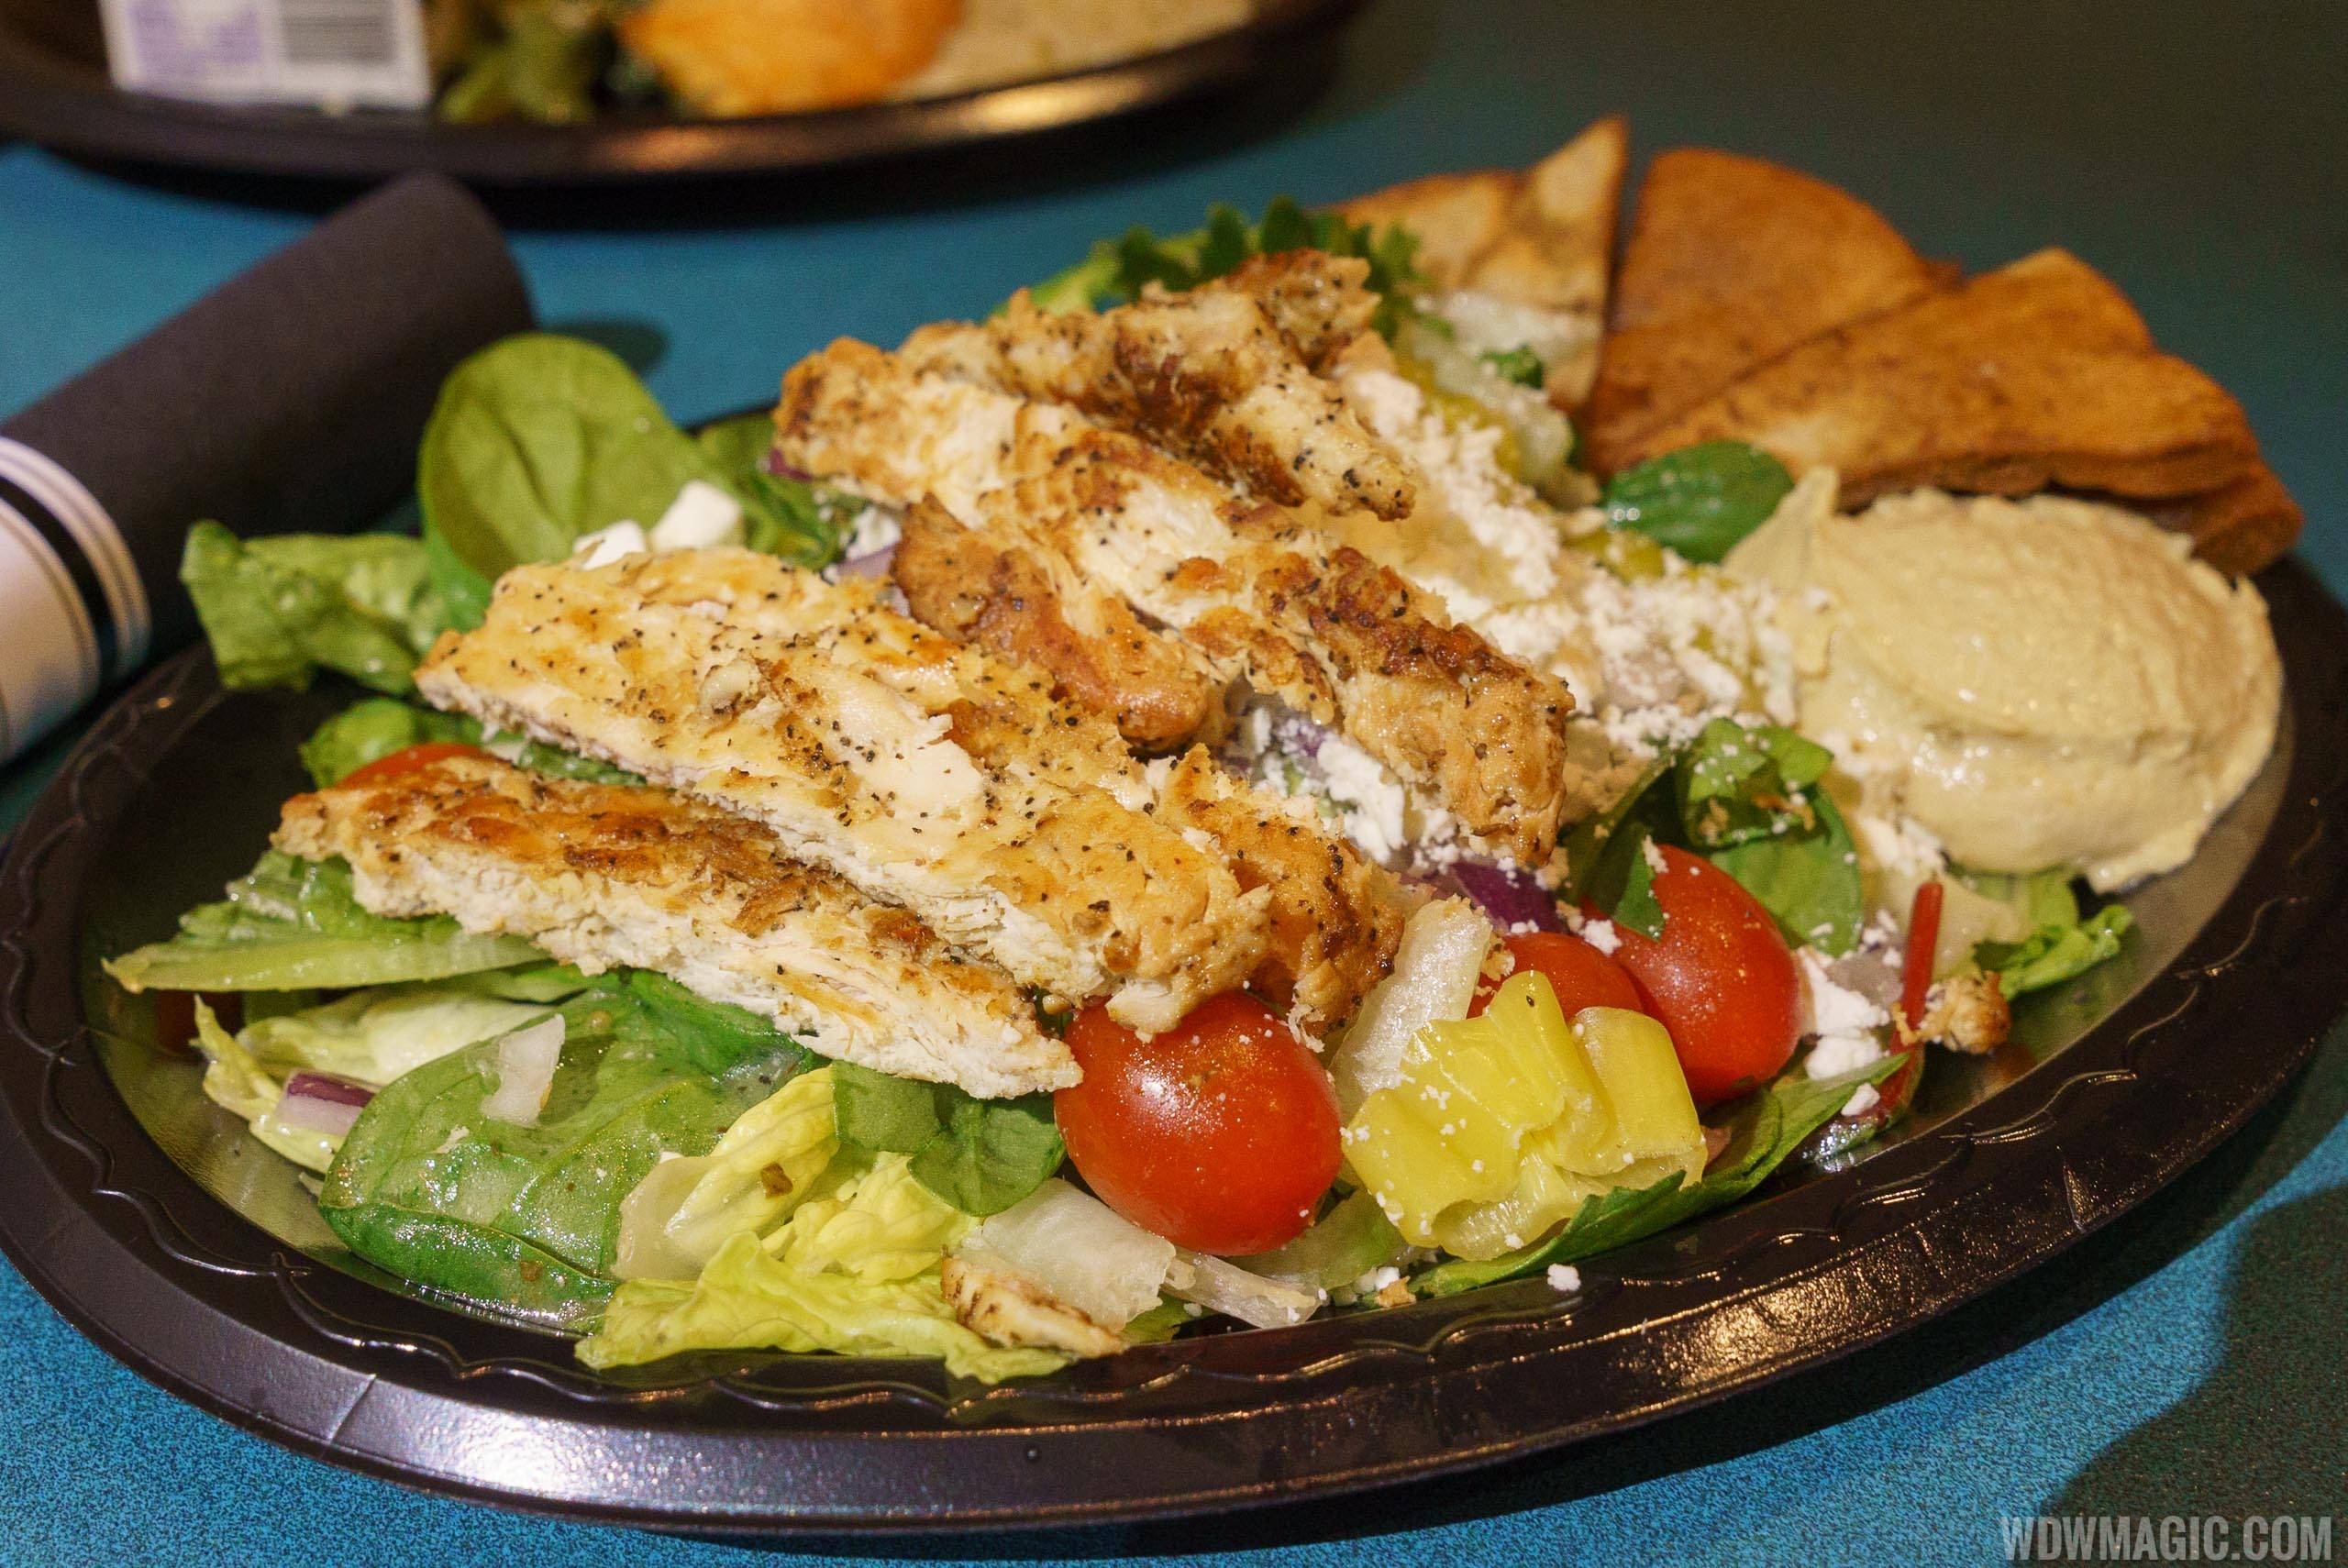 ABC Commissary Dinner - Mediterranean Salad with Chicken